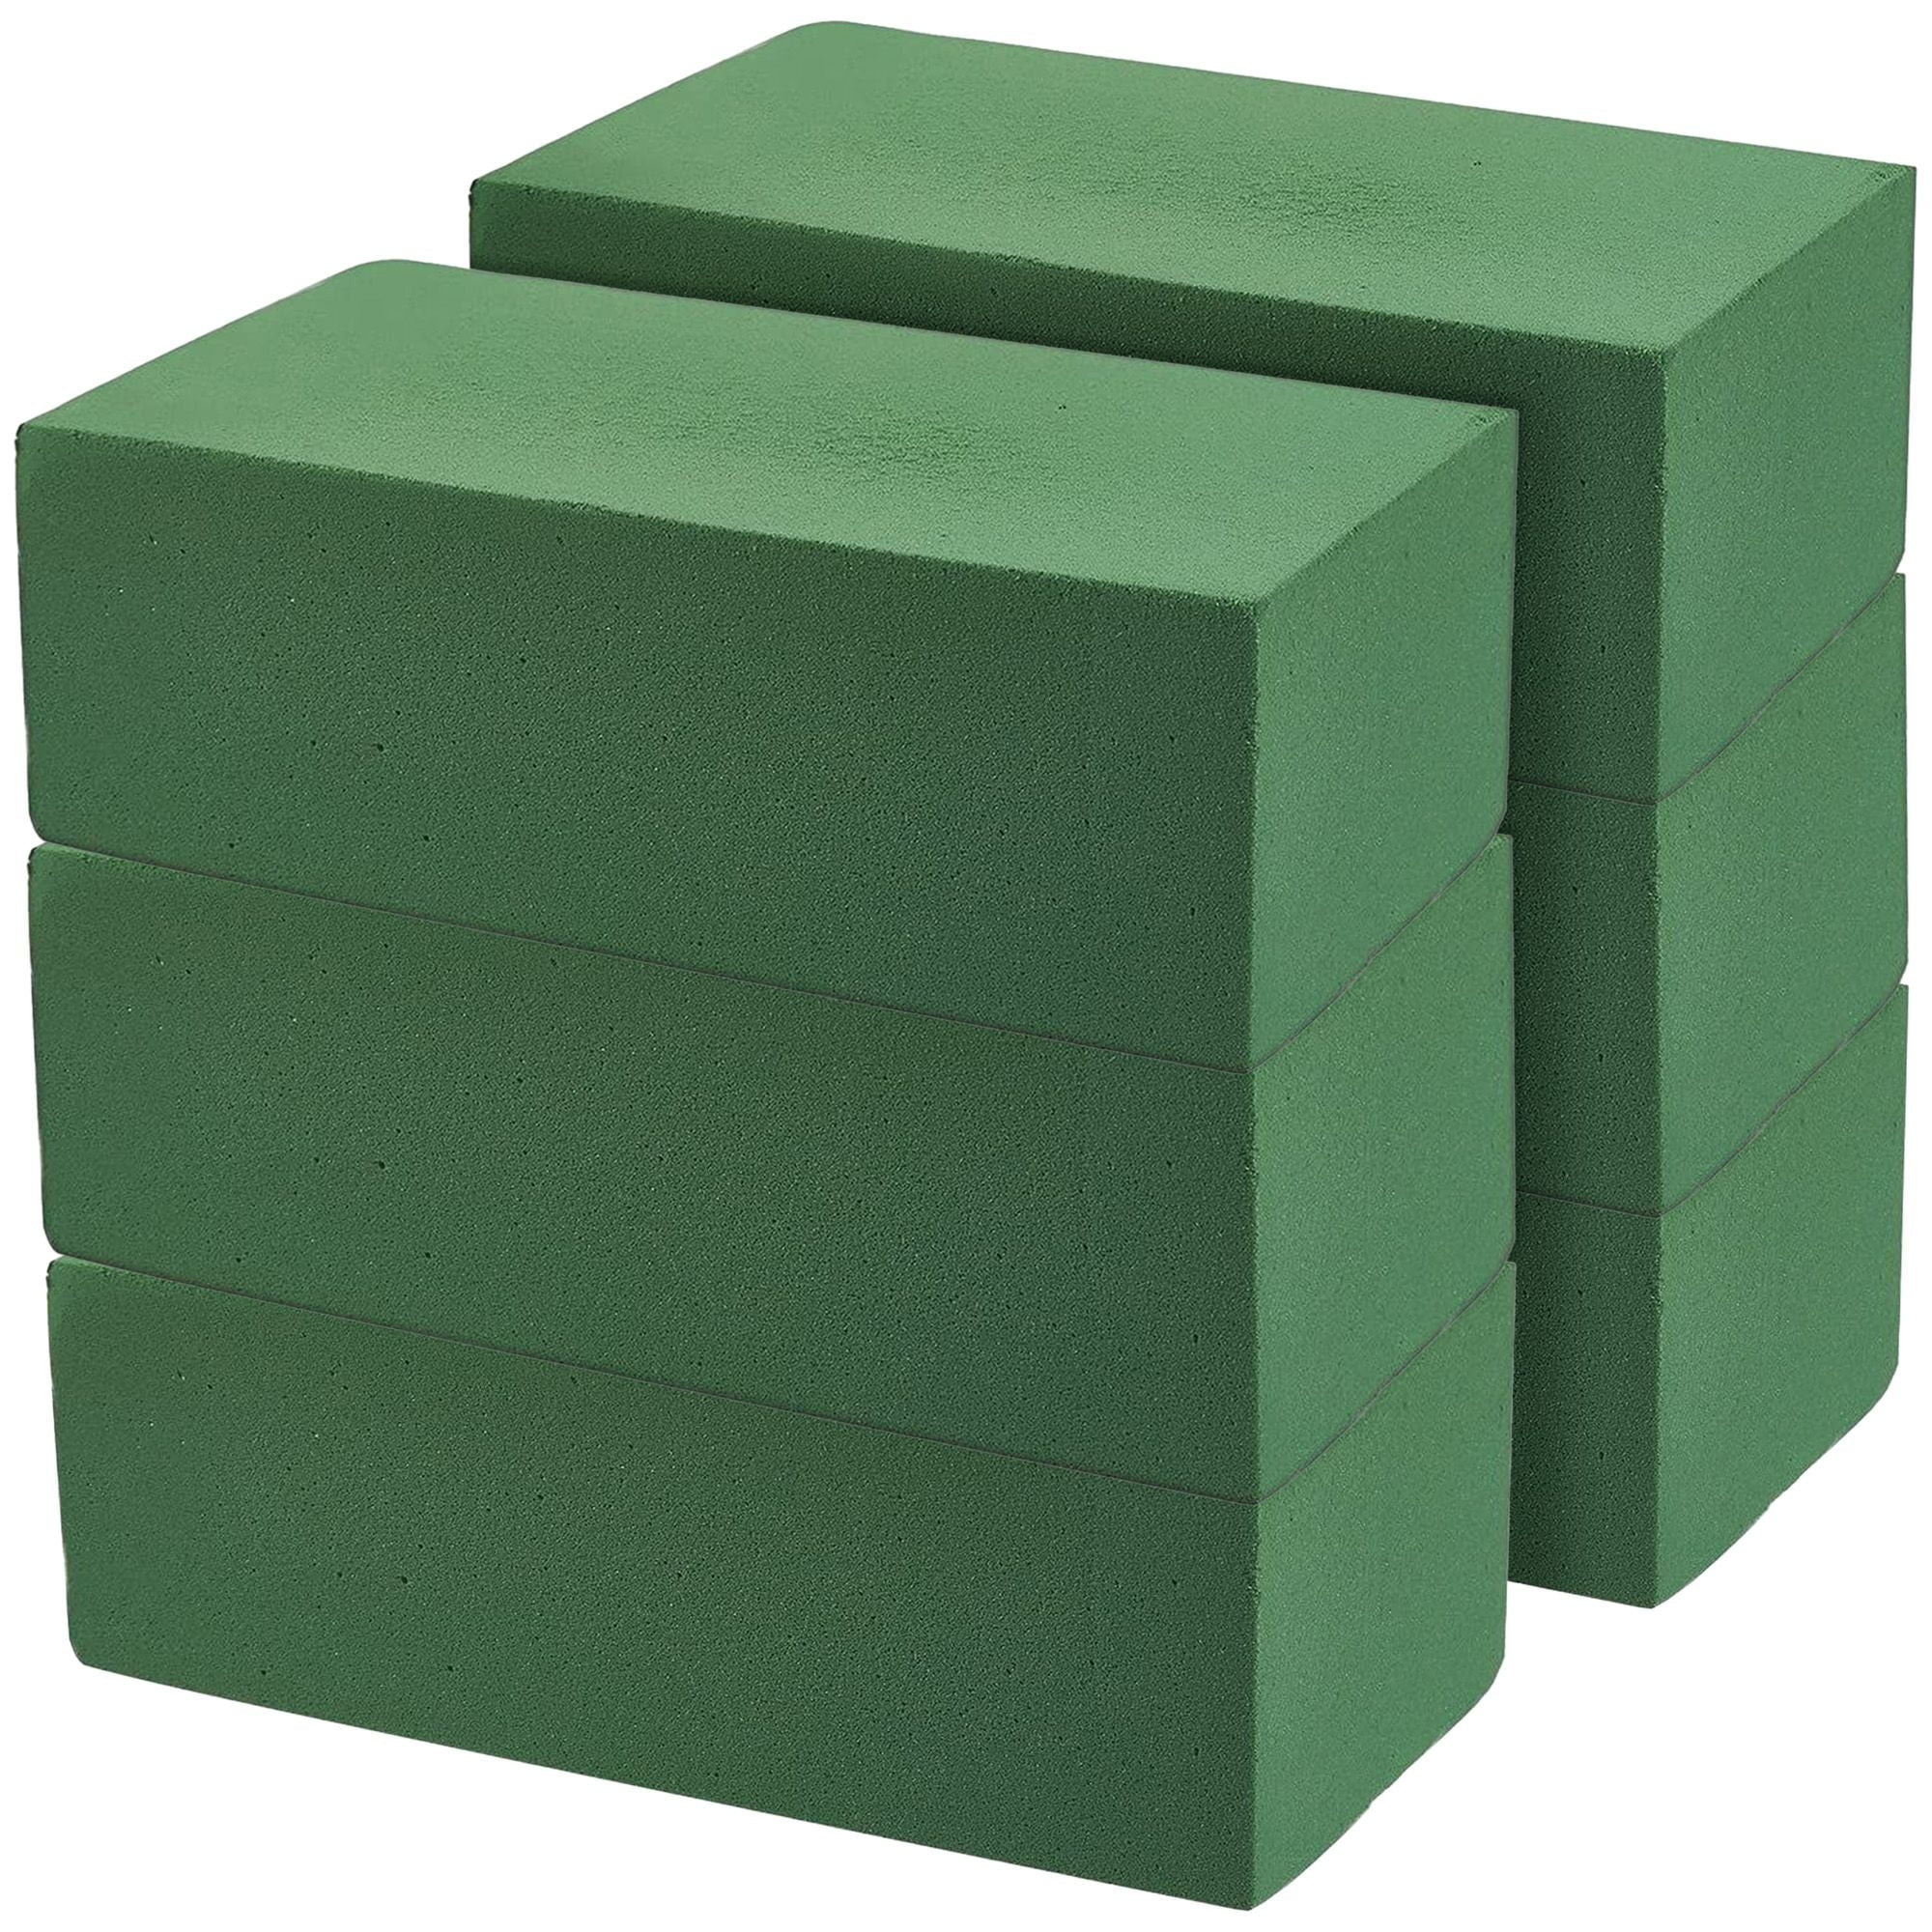 CCINEE Floral Foam Bricks,Florist Foam Green Blocks Supplies for